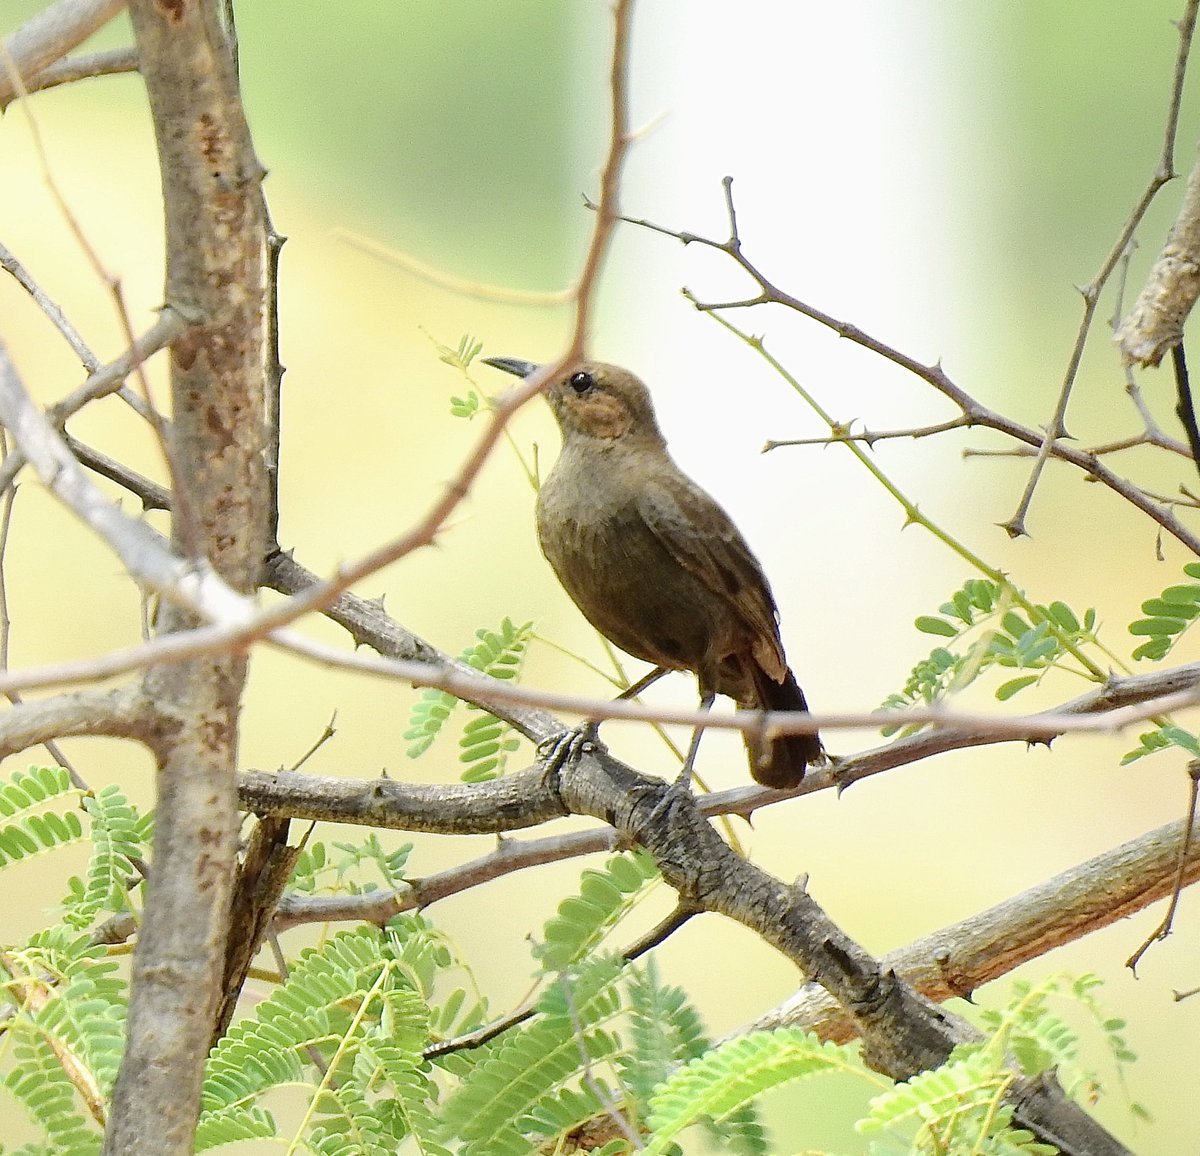 Brown rock chat June 2021 Walajapet, southern India. #indiaves @Avibase @indiAves #BBCWildlifePOTD @ThePhotoHour #Luv4Wilds @birdemergency @worldofwilds @tnbirdwatching #TamilNadu #birdphotography #birdwatching #BirdTwitter #BirdsSeenIn2021